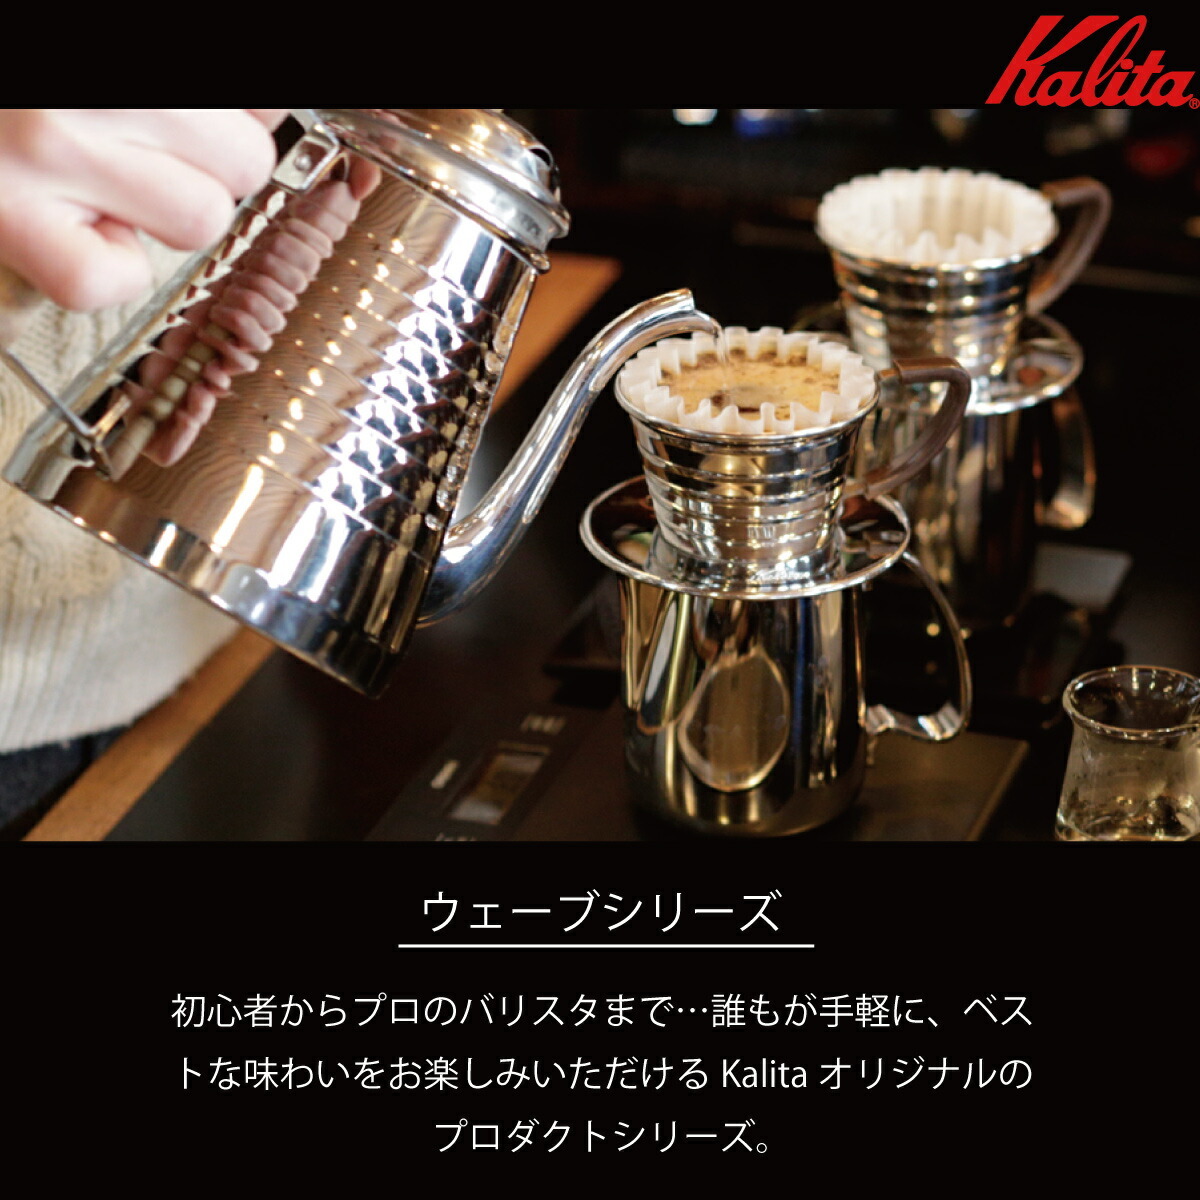 Kalita カリタ コーヒードリッパー スタンドセット 2〜4人用 WDG-185